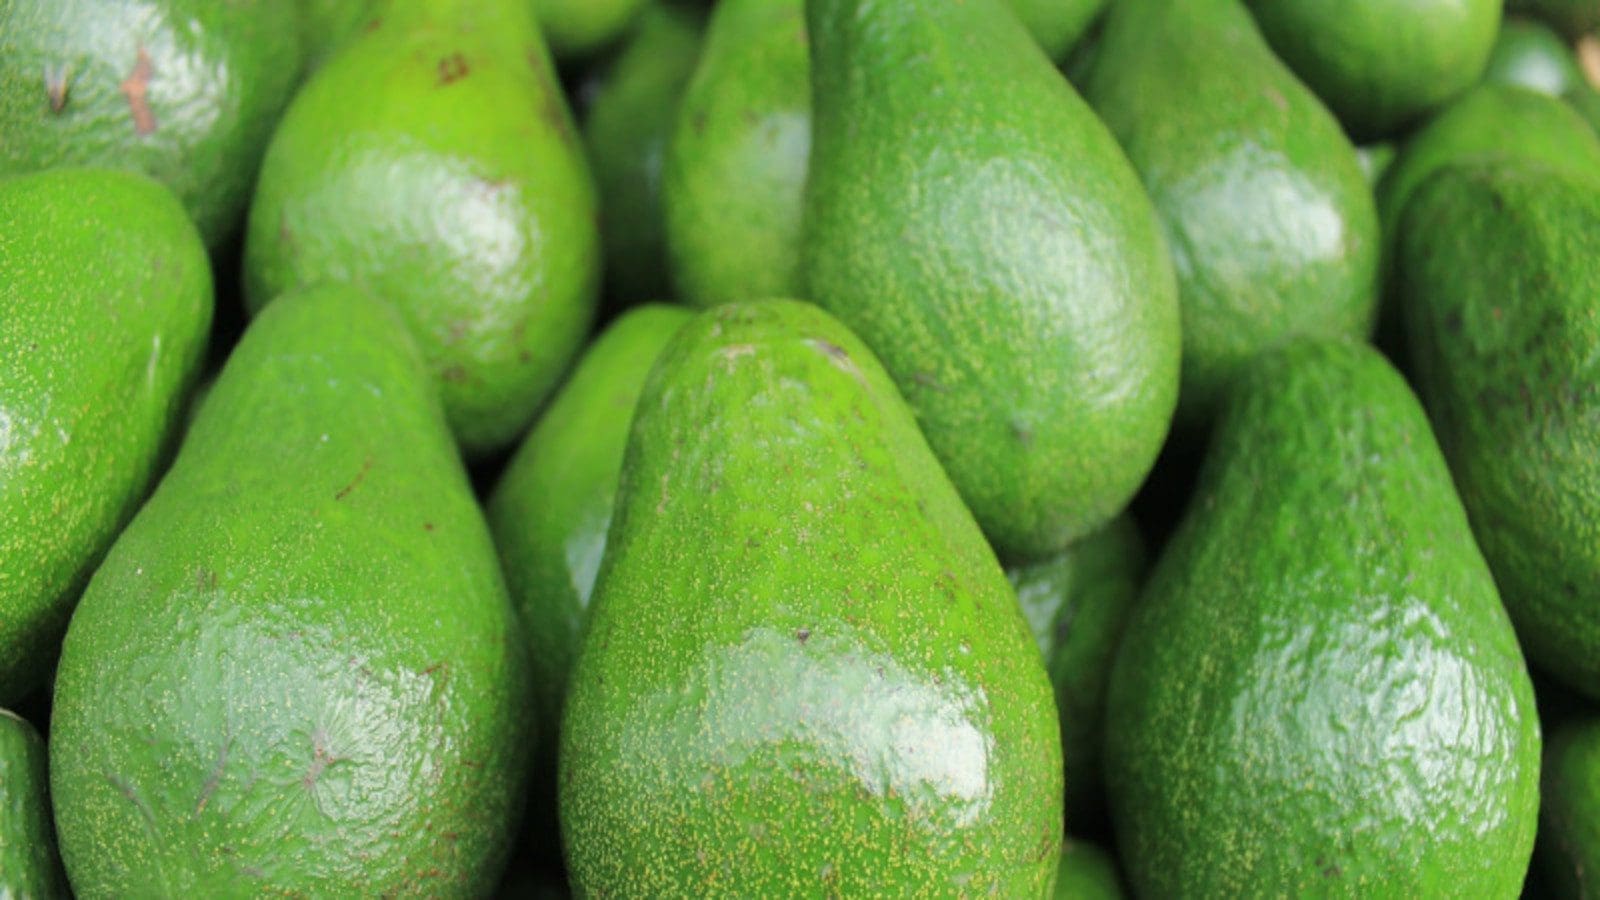 Kenya’s Horticultural Crops Directorate indefinitely extends avocado export ban